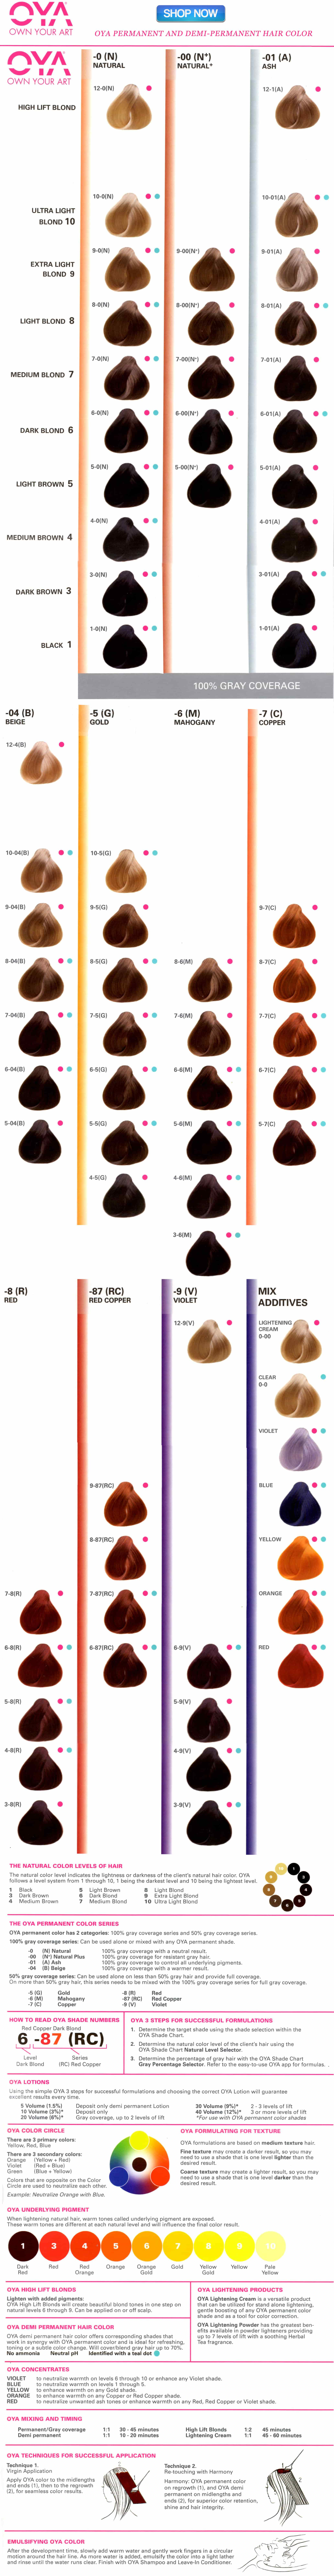 Oya Color Chart